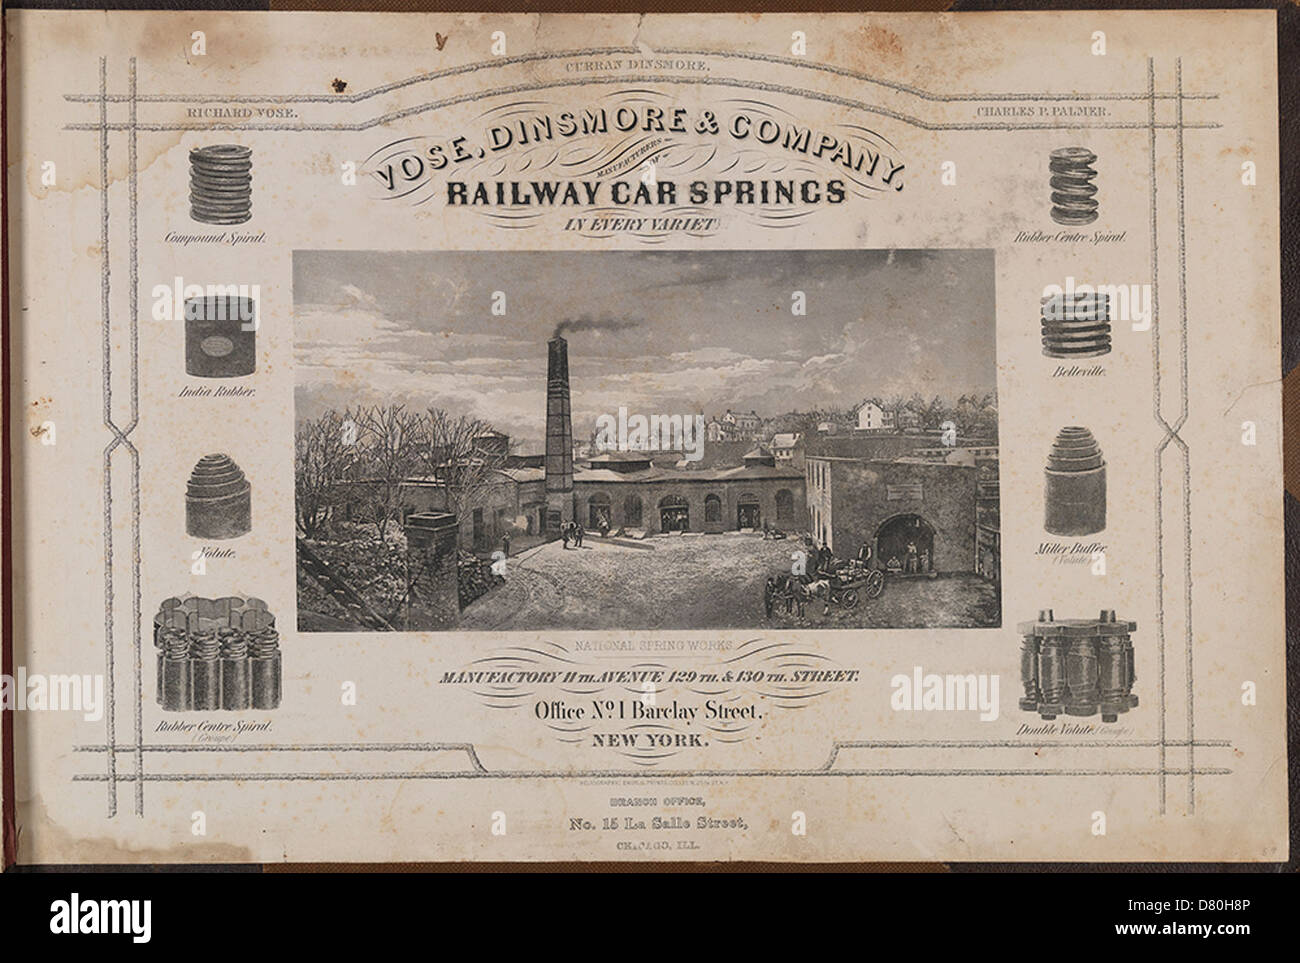 Vose, Dinsmore & Company, Railway Car Springs Stock Photo